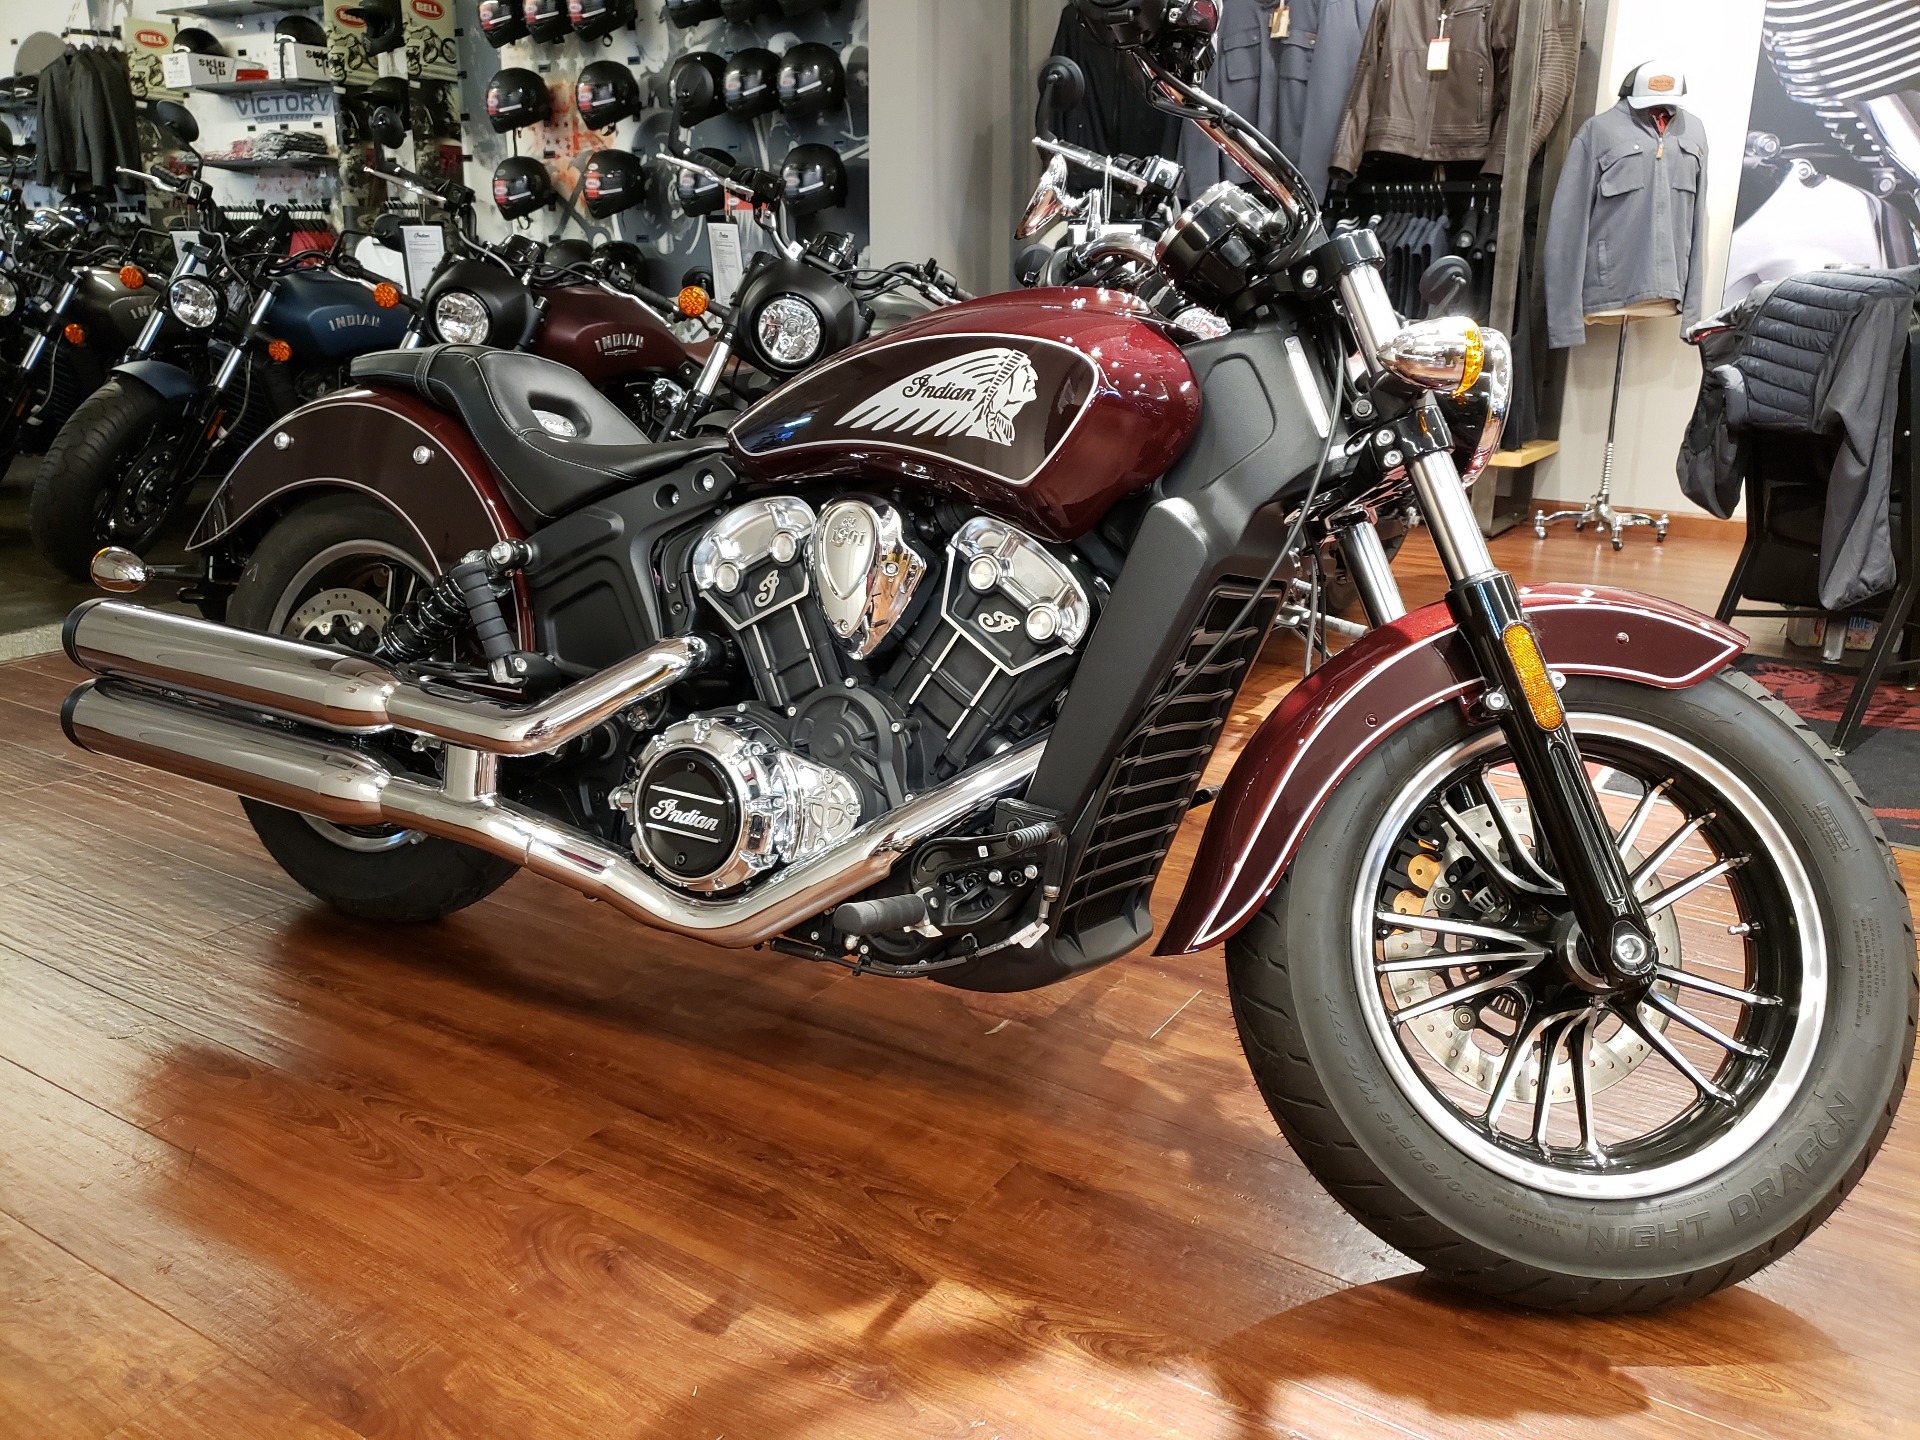 2021 Indian Scout Abs For Sale New Maroon Metallic Crimson Metallic Motorcycles In Nashville Tn Ind169496